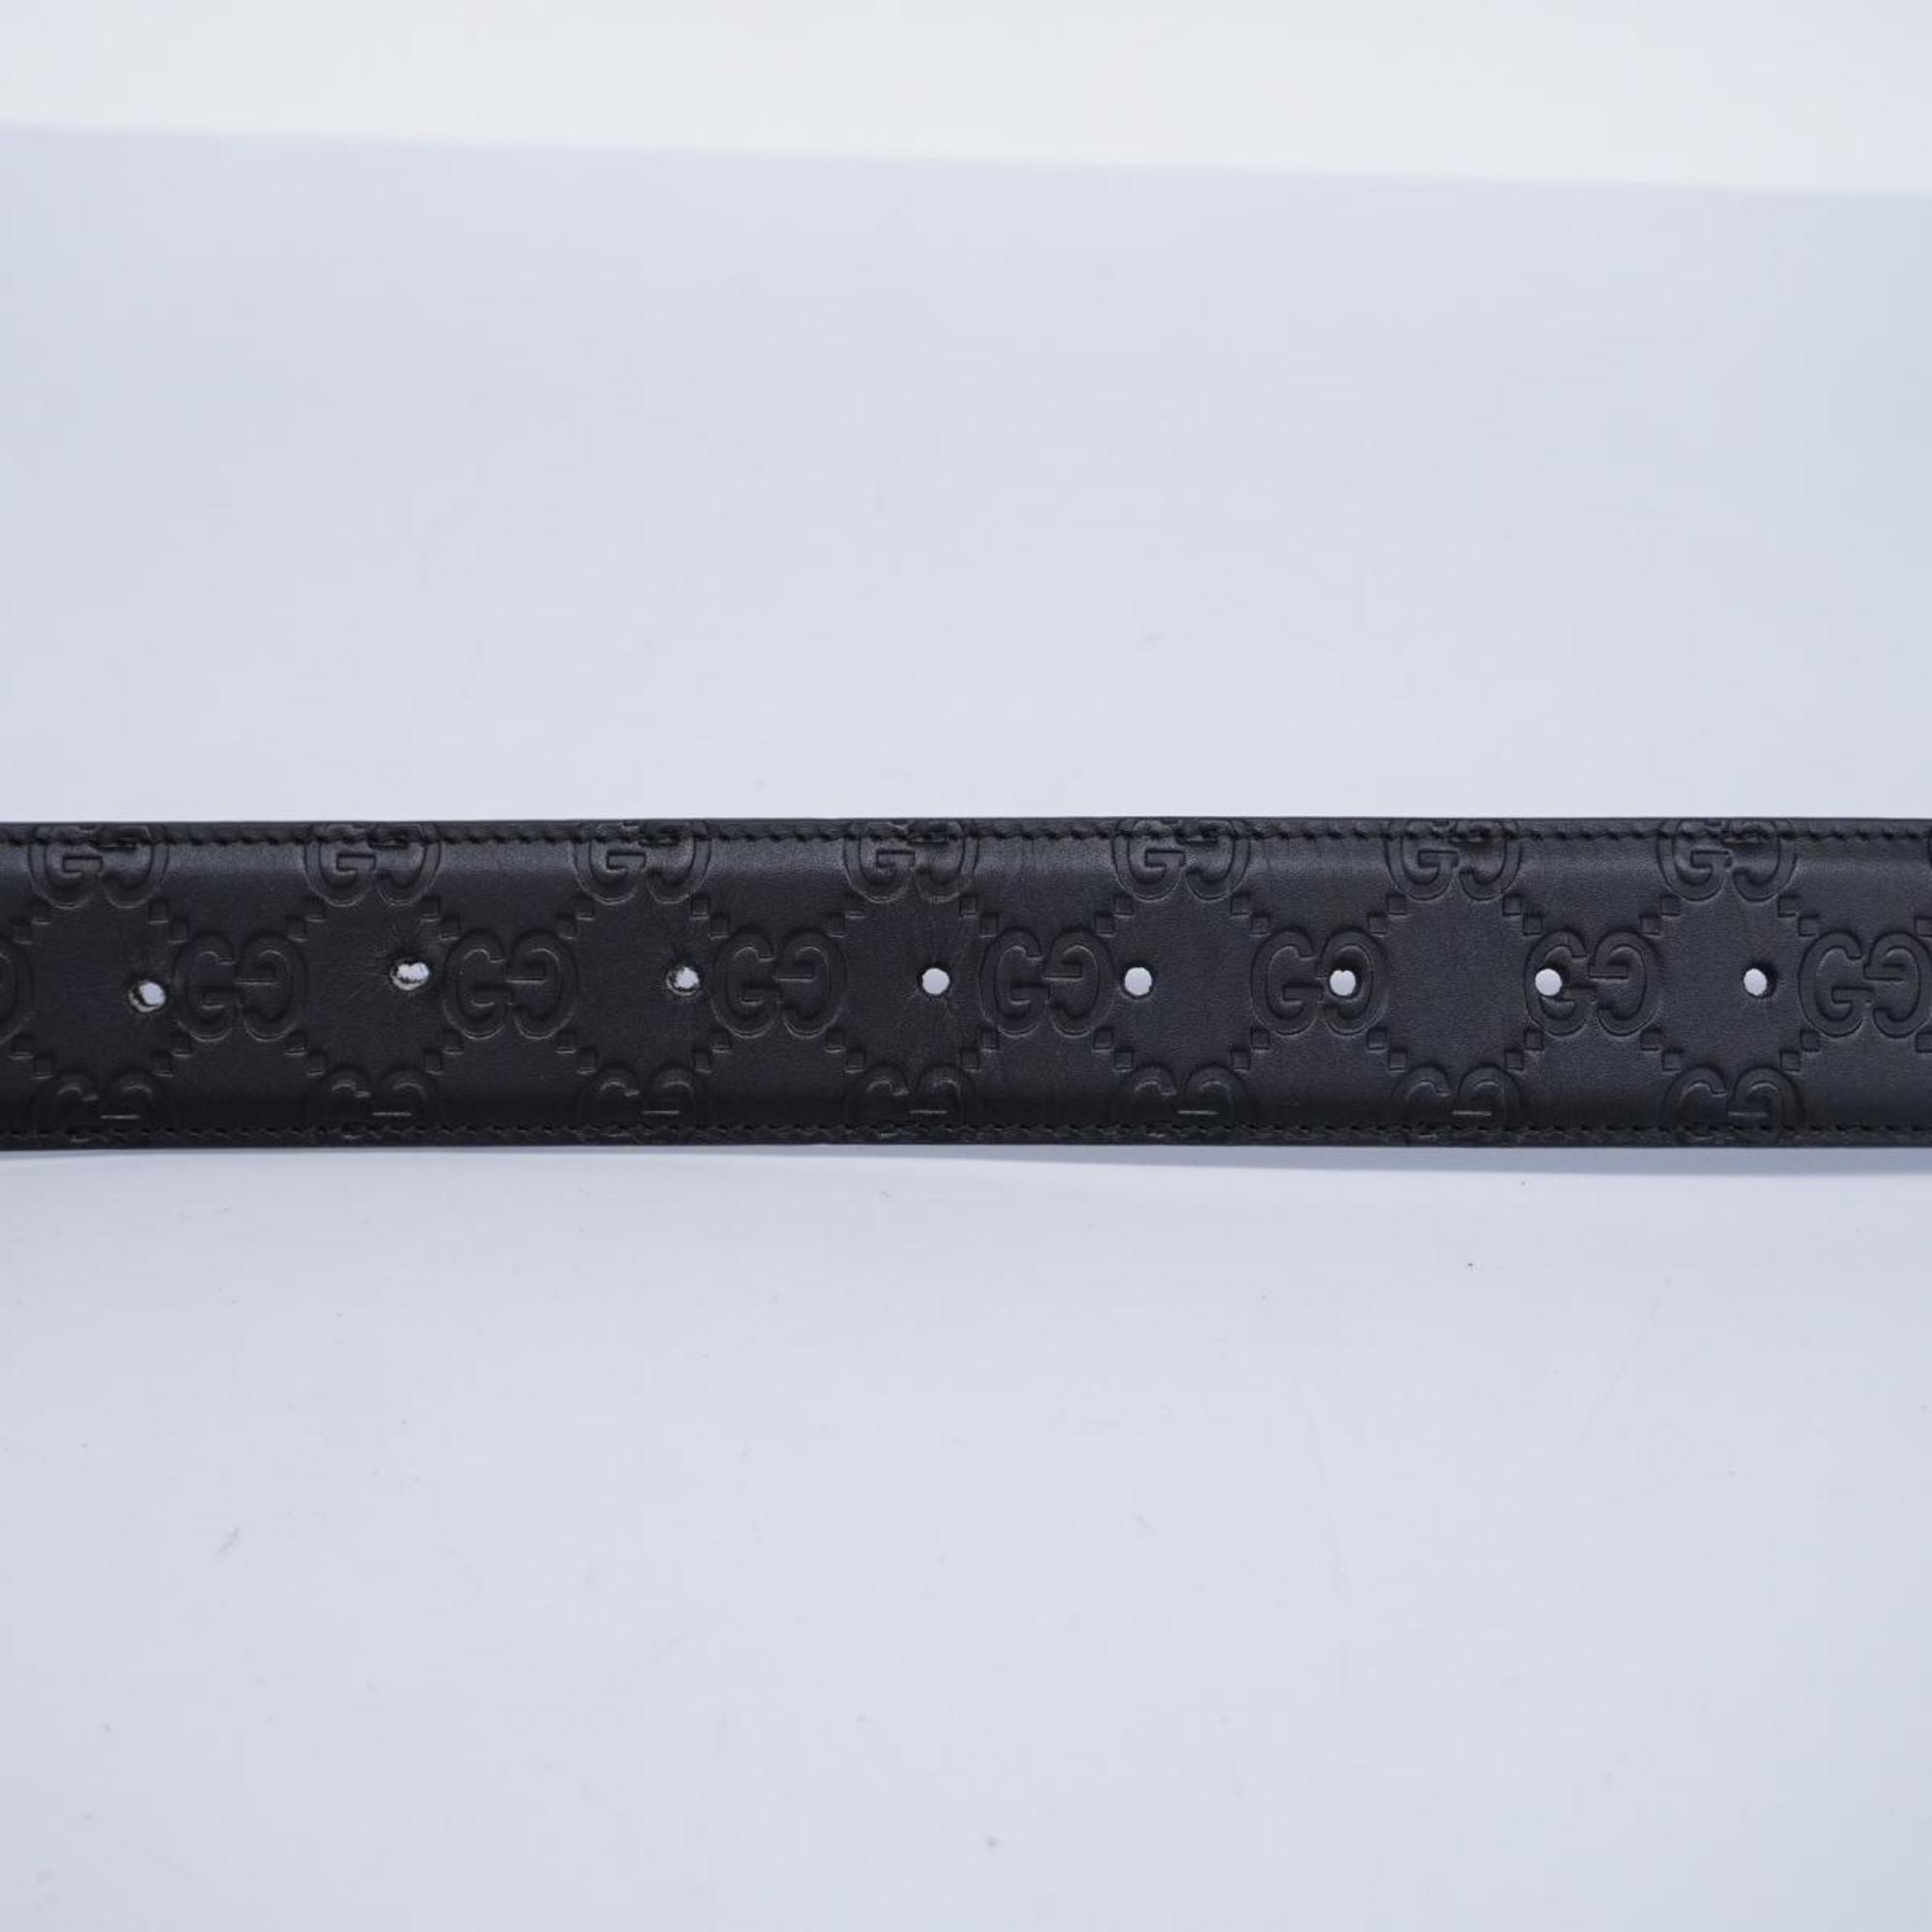 Gucci Belt Guccissima Interlocking G 411924 Leather Black Men's